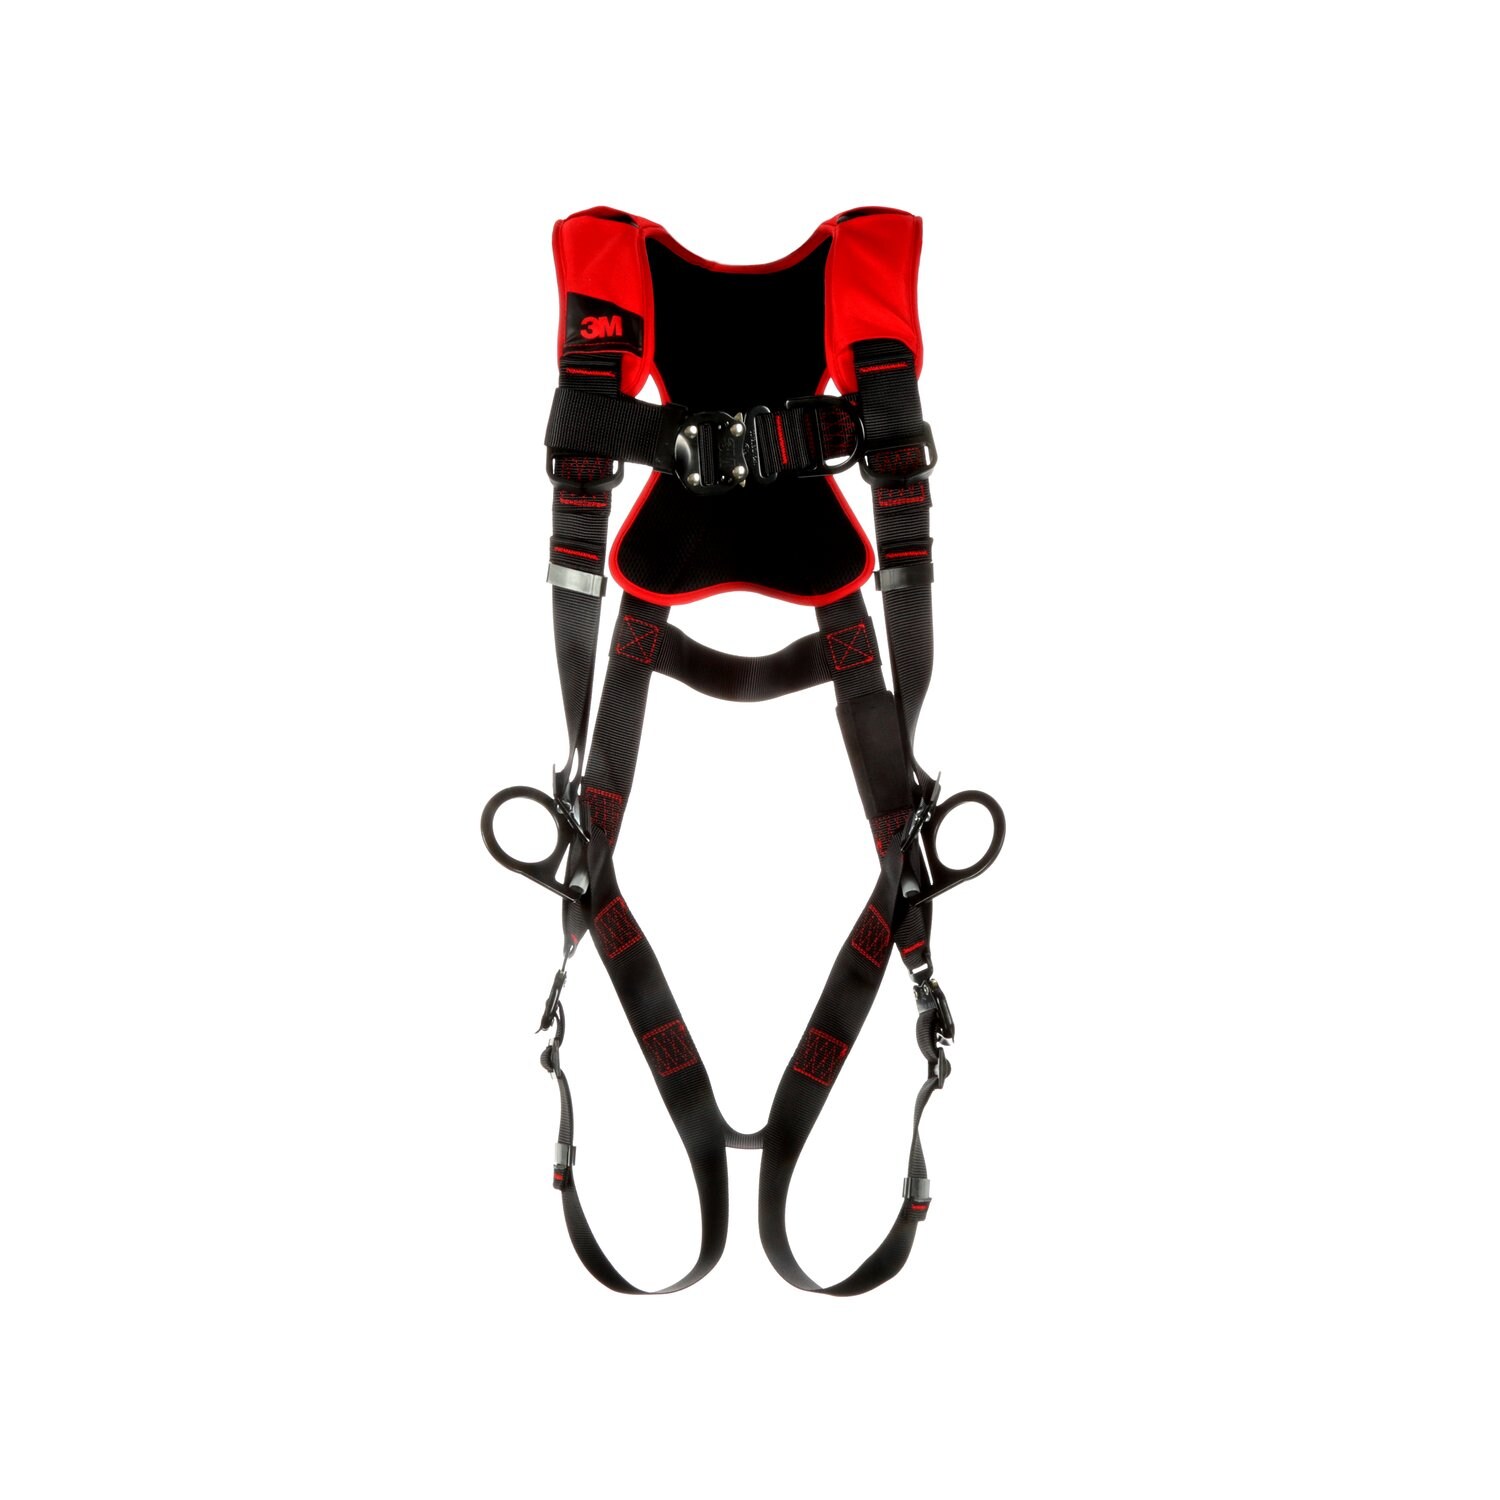 7012816726 - 3M Protecta P200 Comfort Vest Climbing/Positioning Safety Harness 1161443, Medium/Large